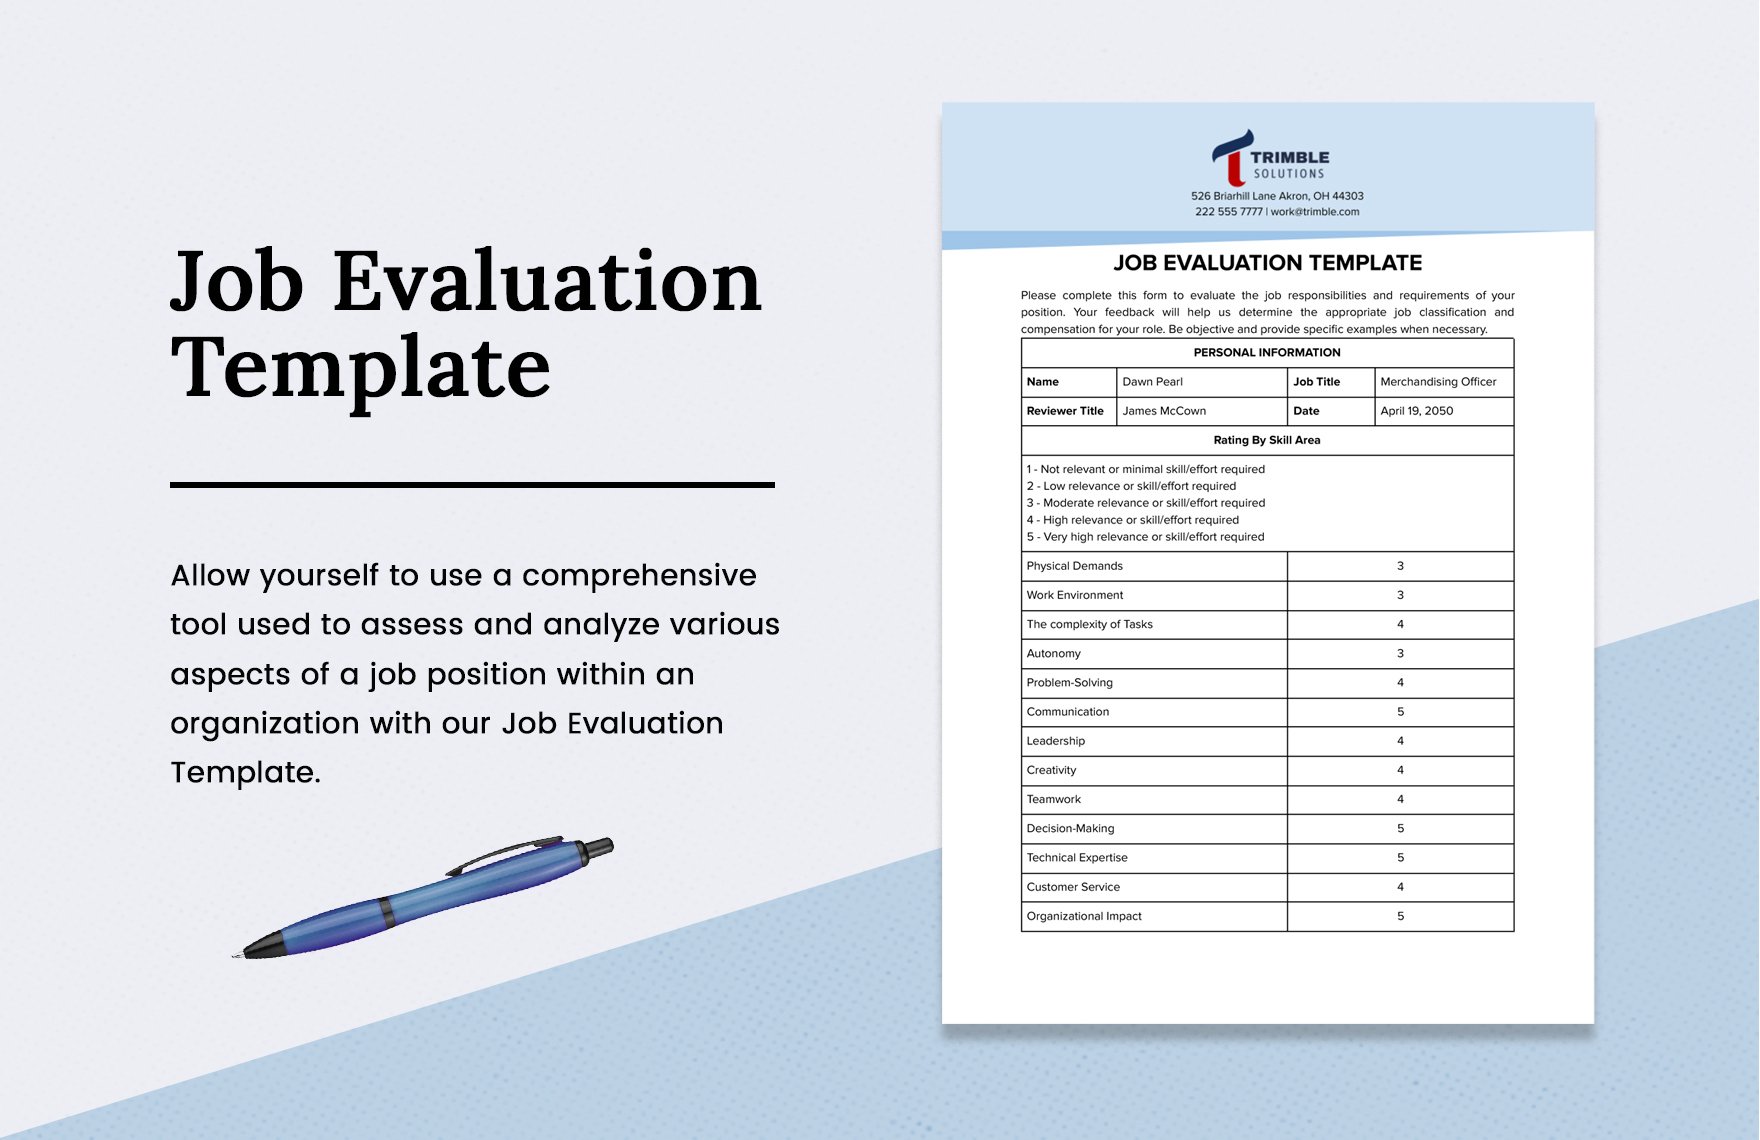 Free Job Evaluation Template in Word, Google Docs, PDF, PSD